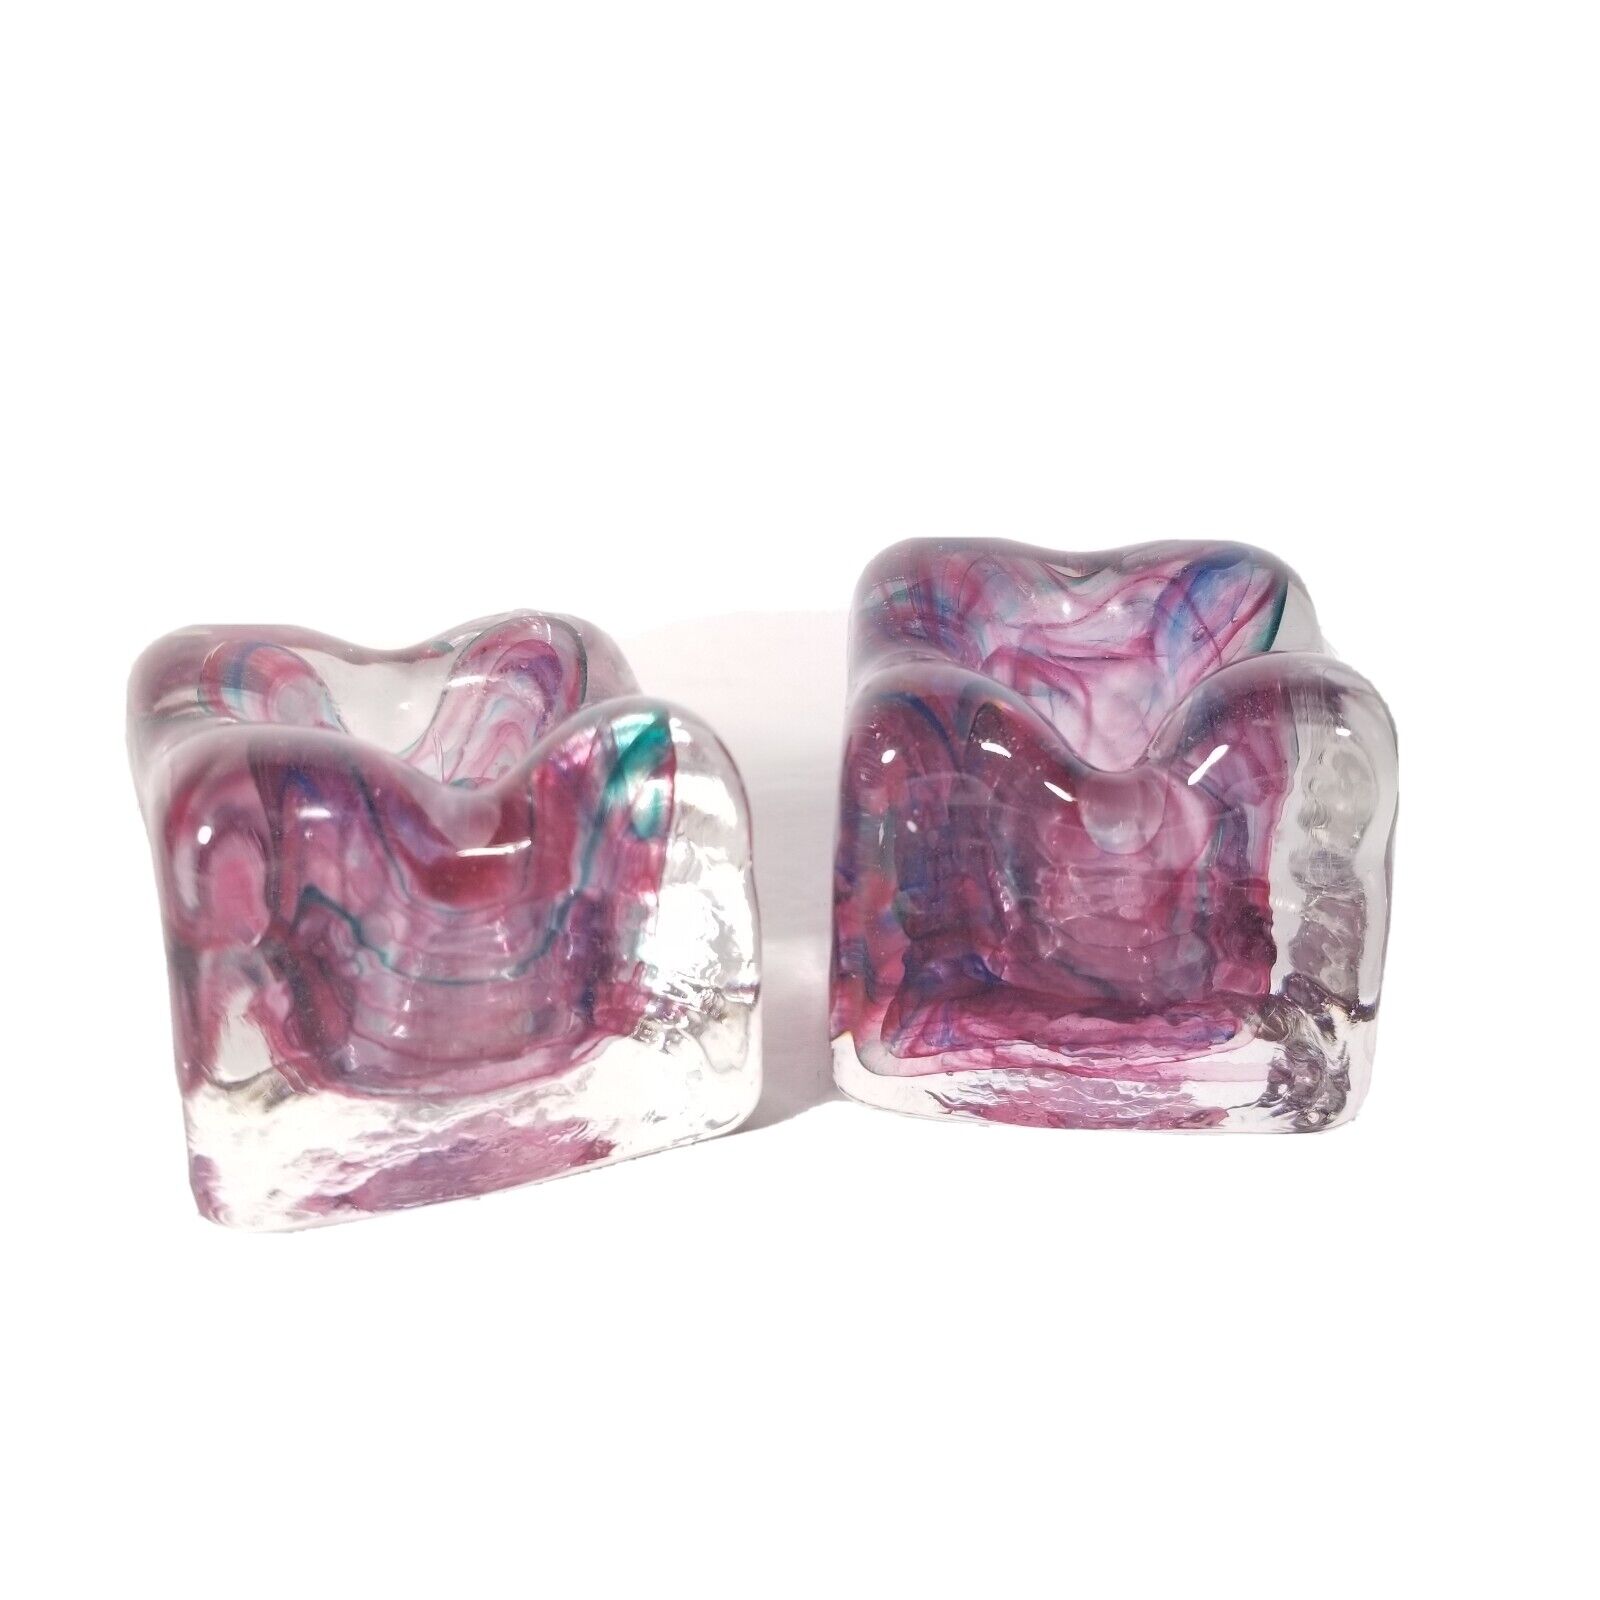 Adrian Sankey Studio Art Glass Candle Stick Holders Pair Set Taper Swirl Pink